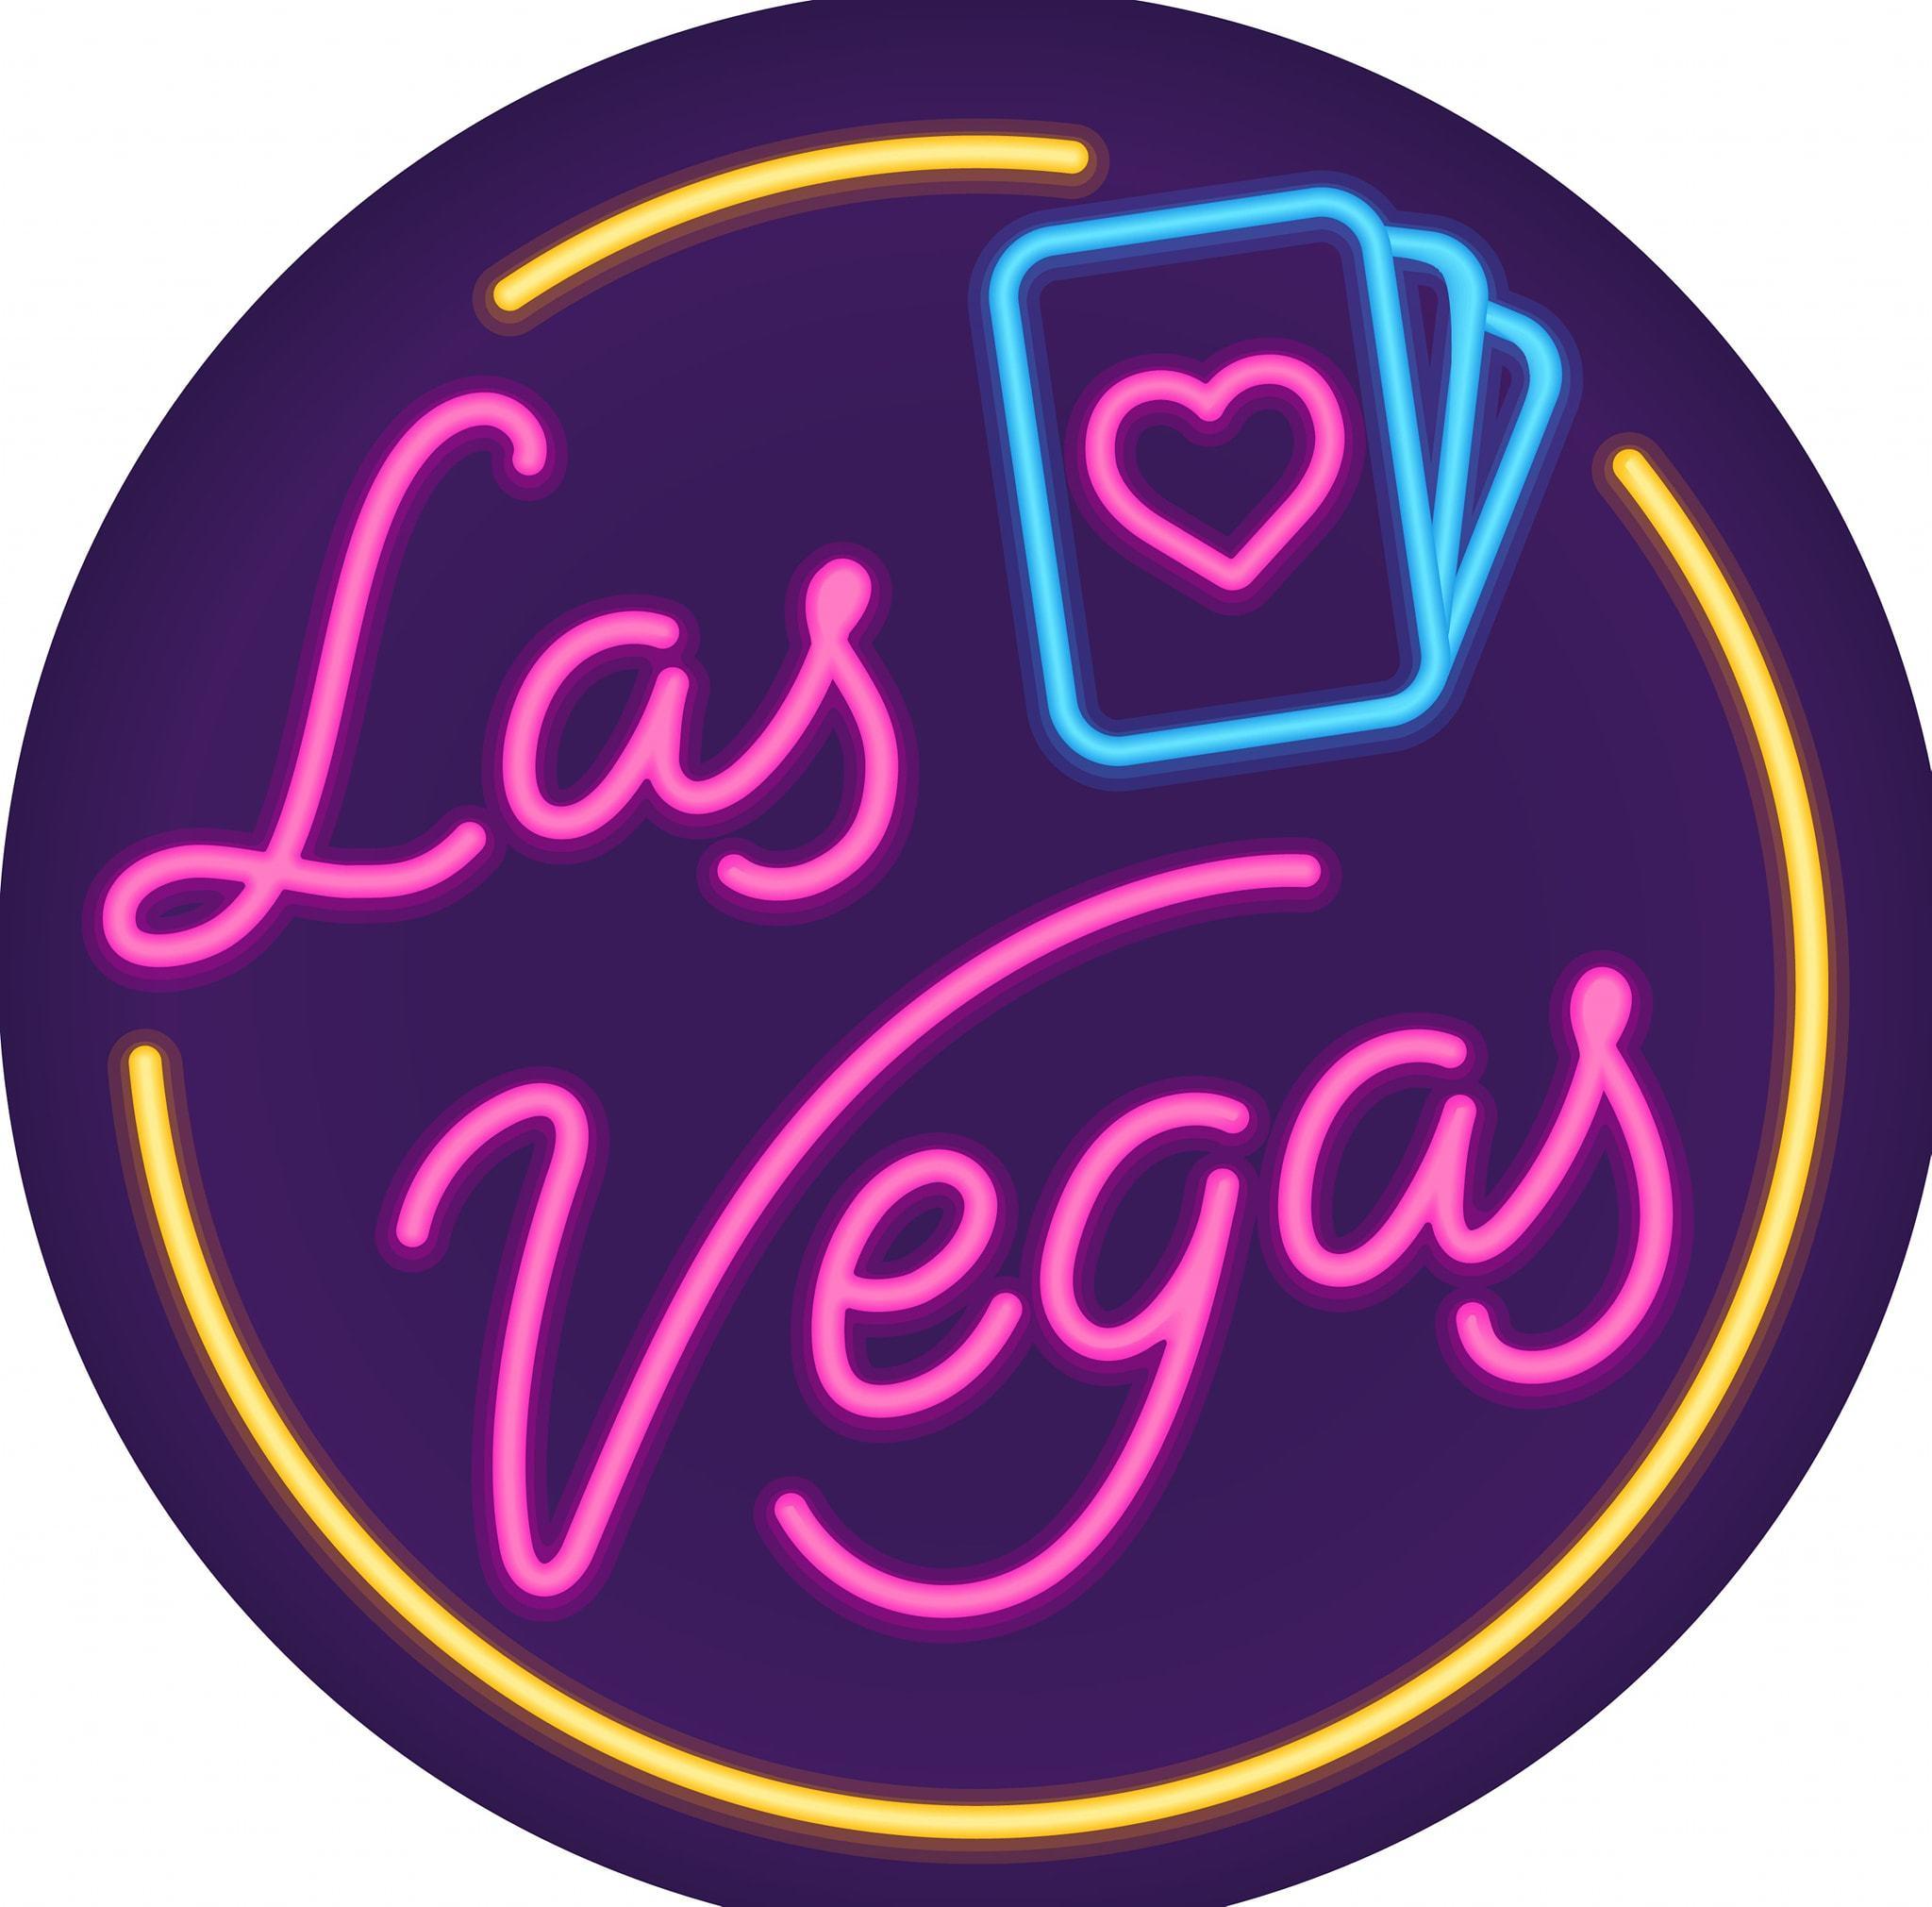 Las Vegas Night Club logo